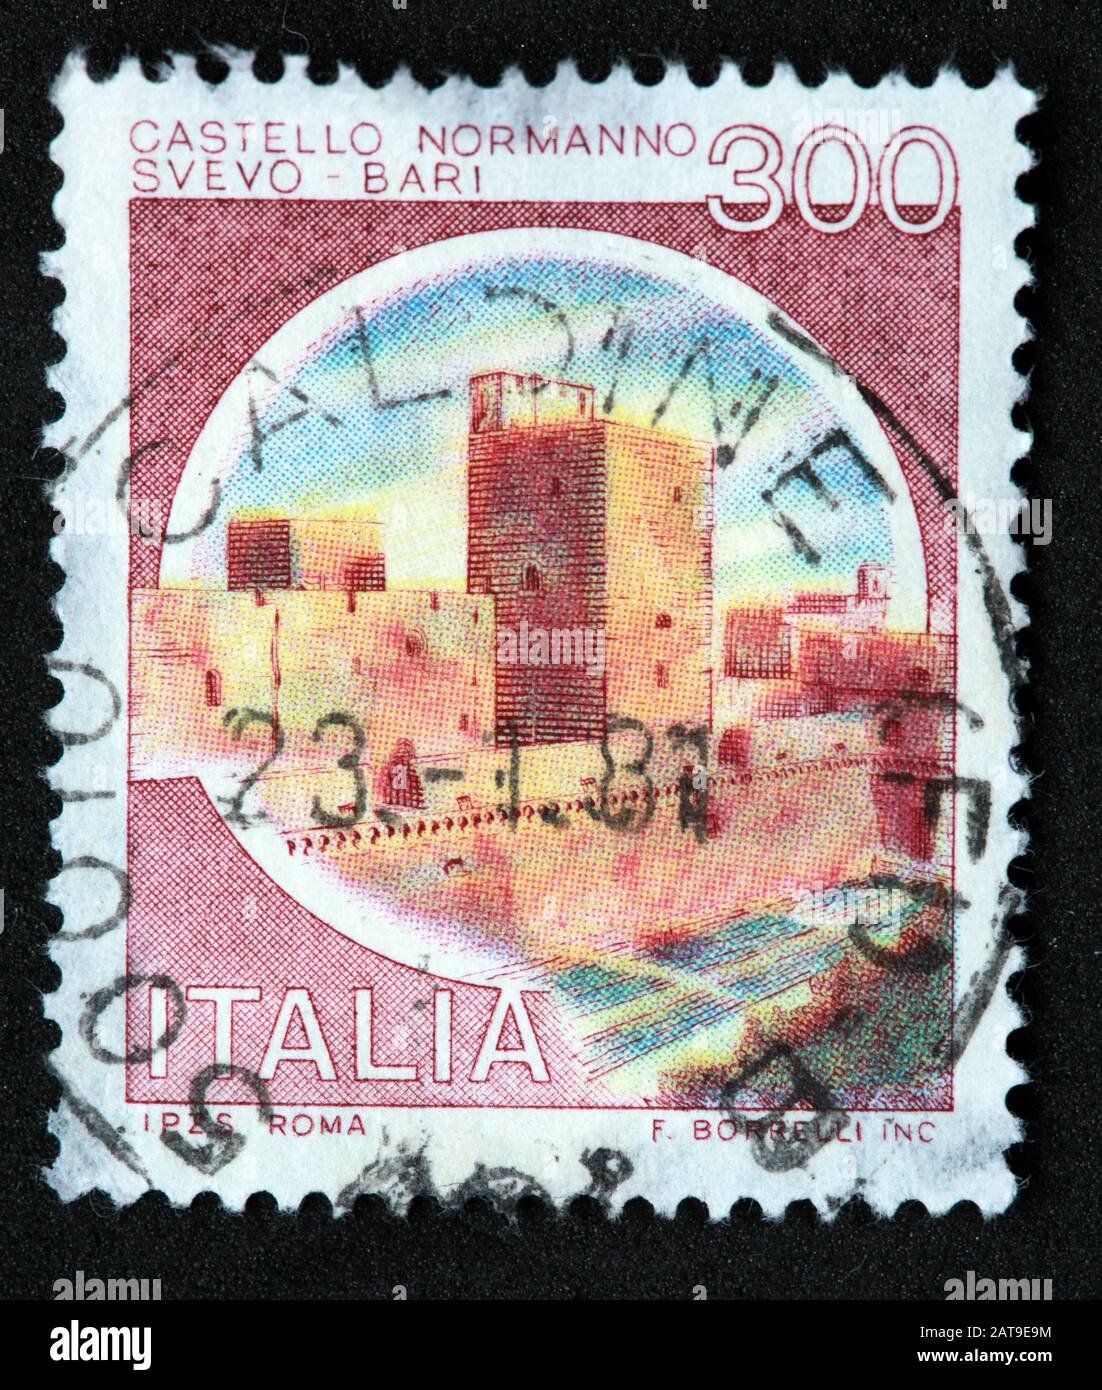 Timbre italien, poste Italia utilisé et franked Stamp, châteaux d'Italie, Italia 300 lire Castello Normanno Svevo , Bari, Roma Banque D'Images